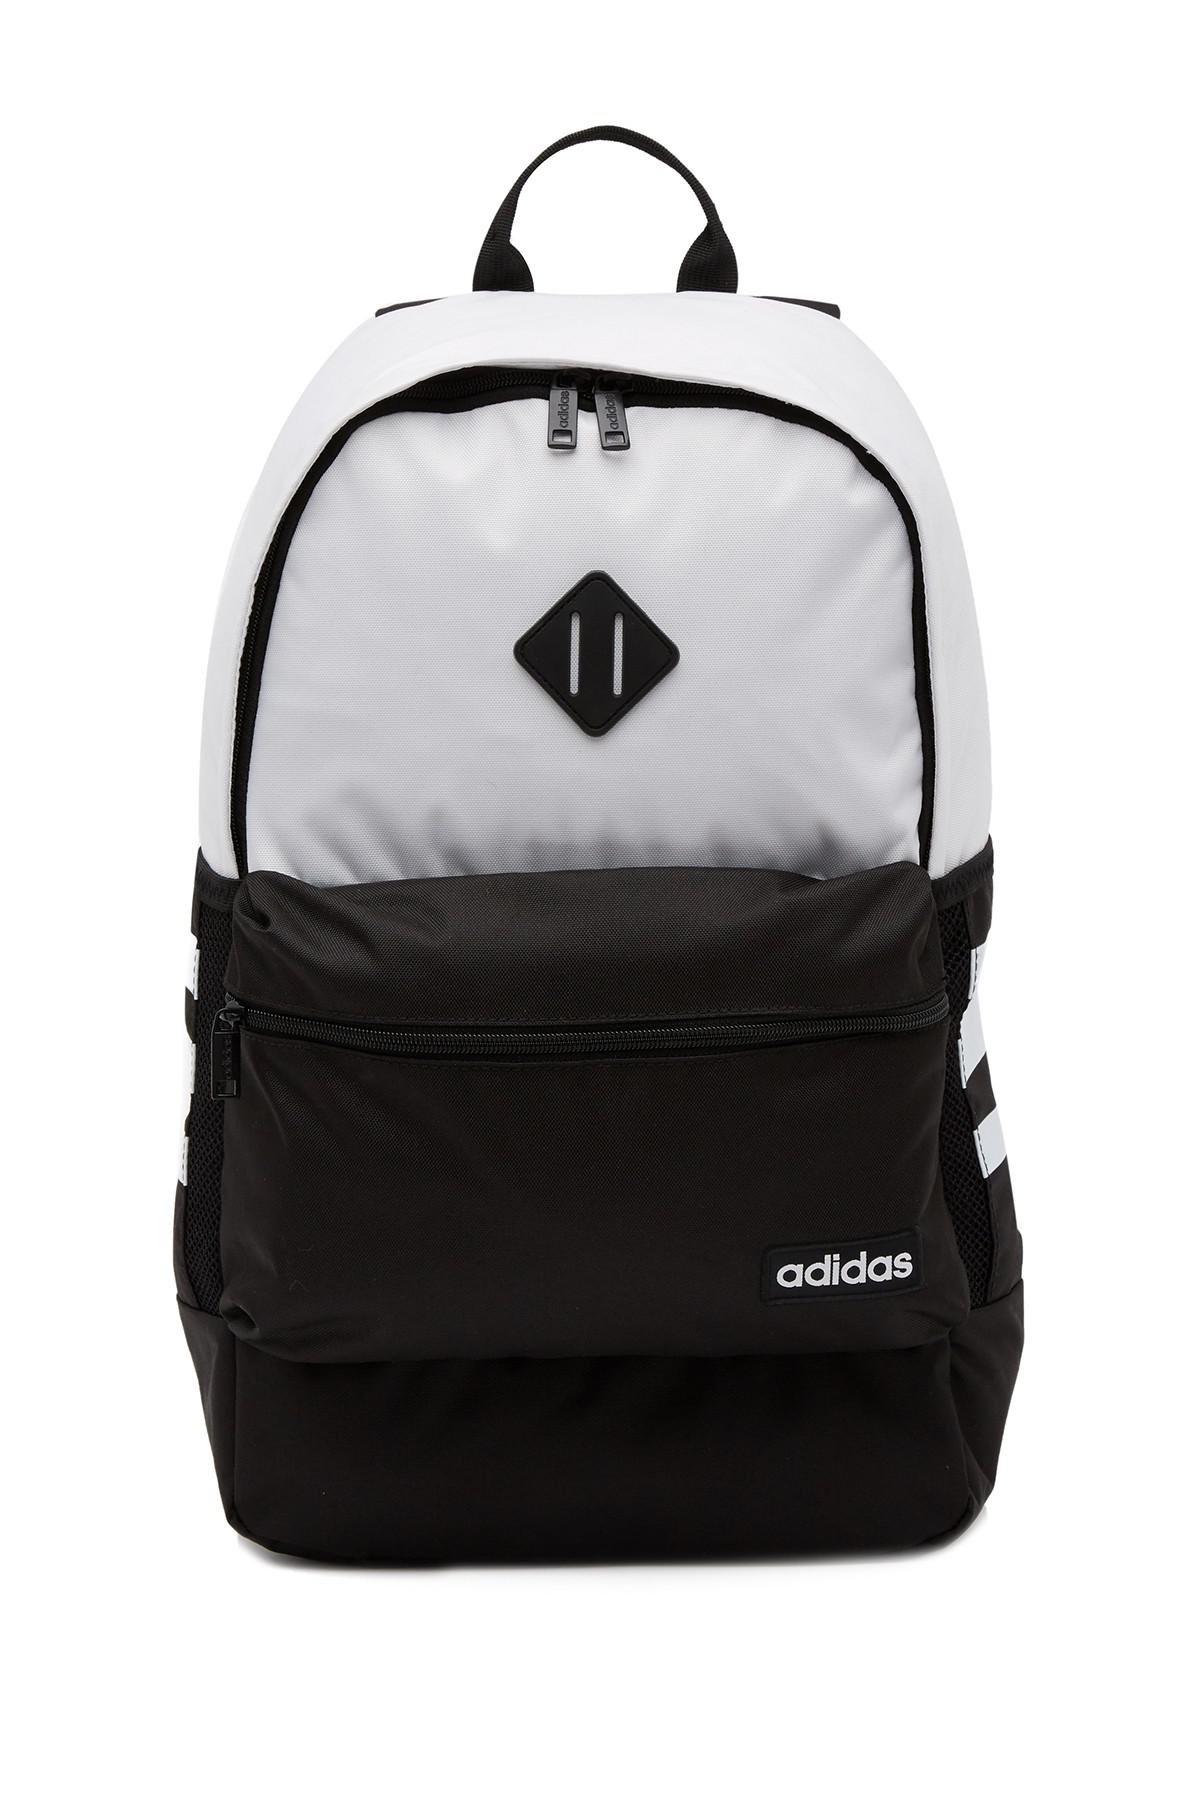 adidas classic three stripe backpack